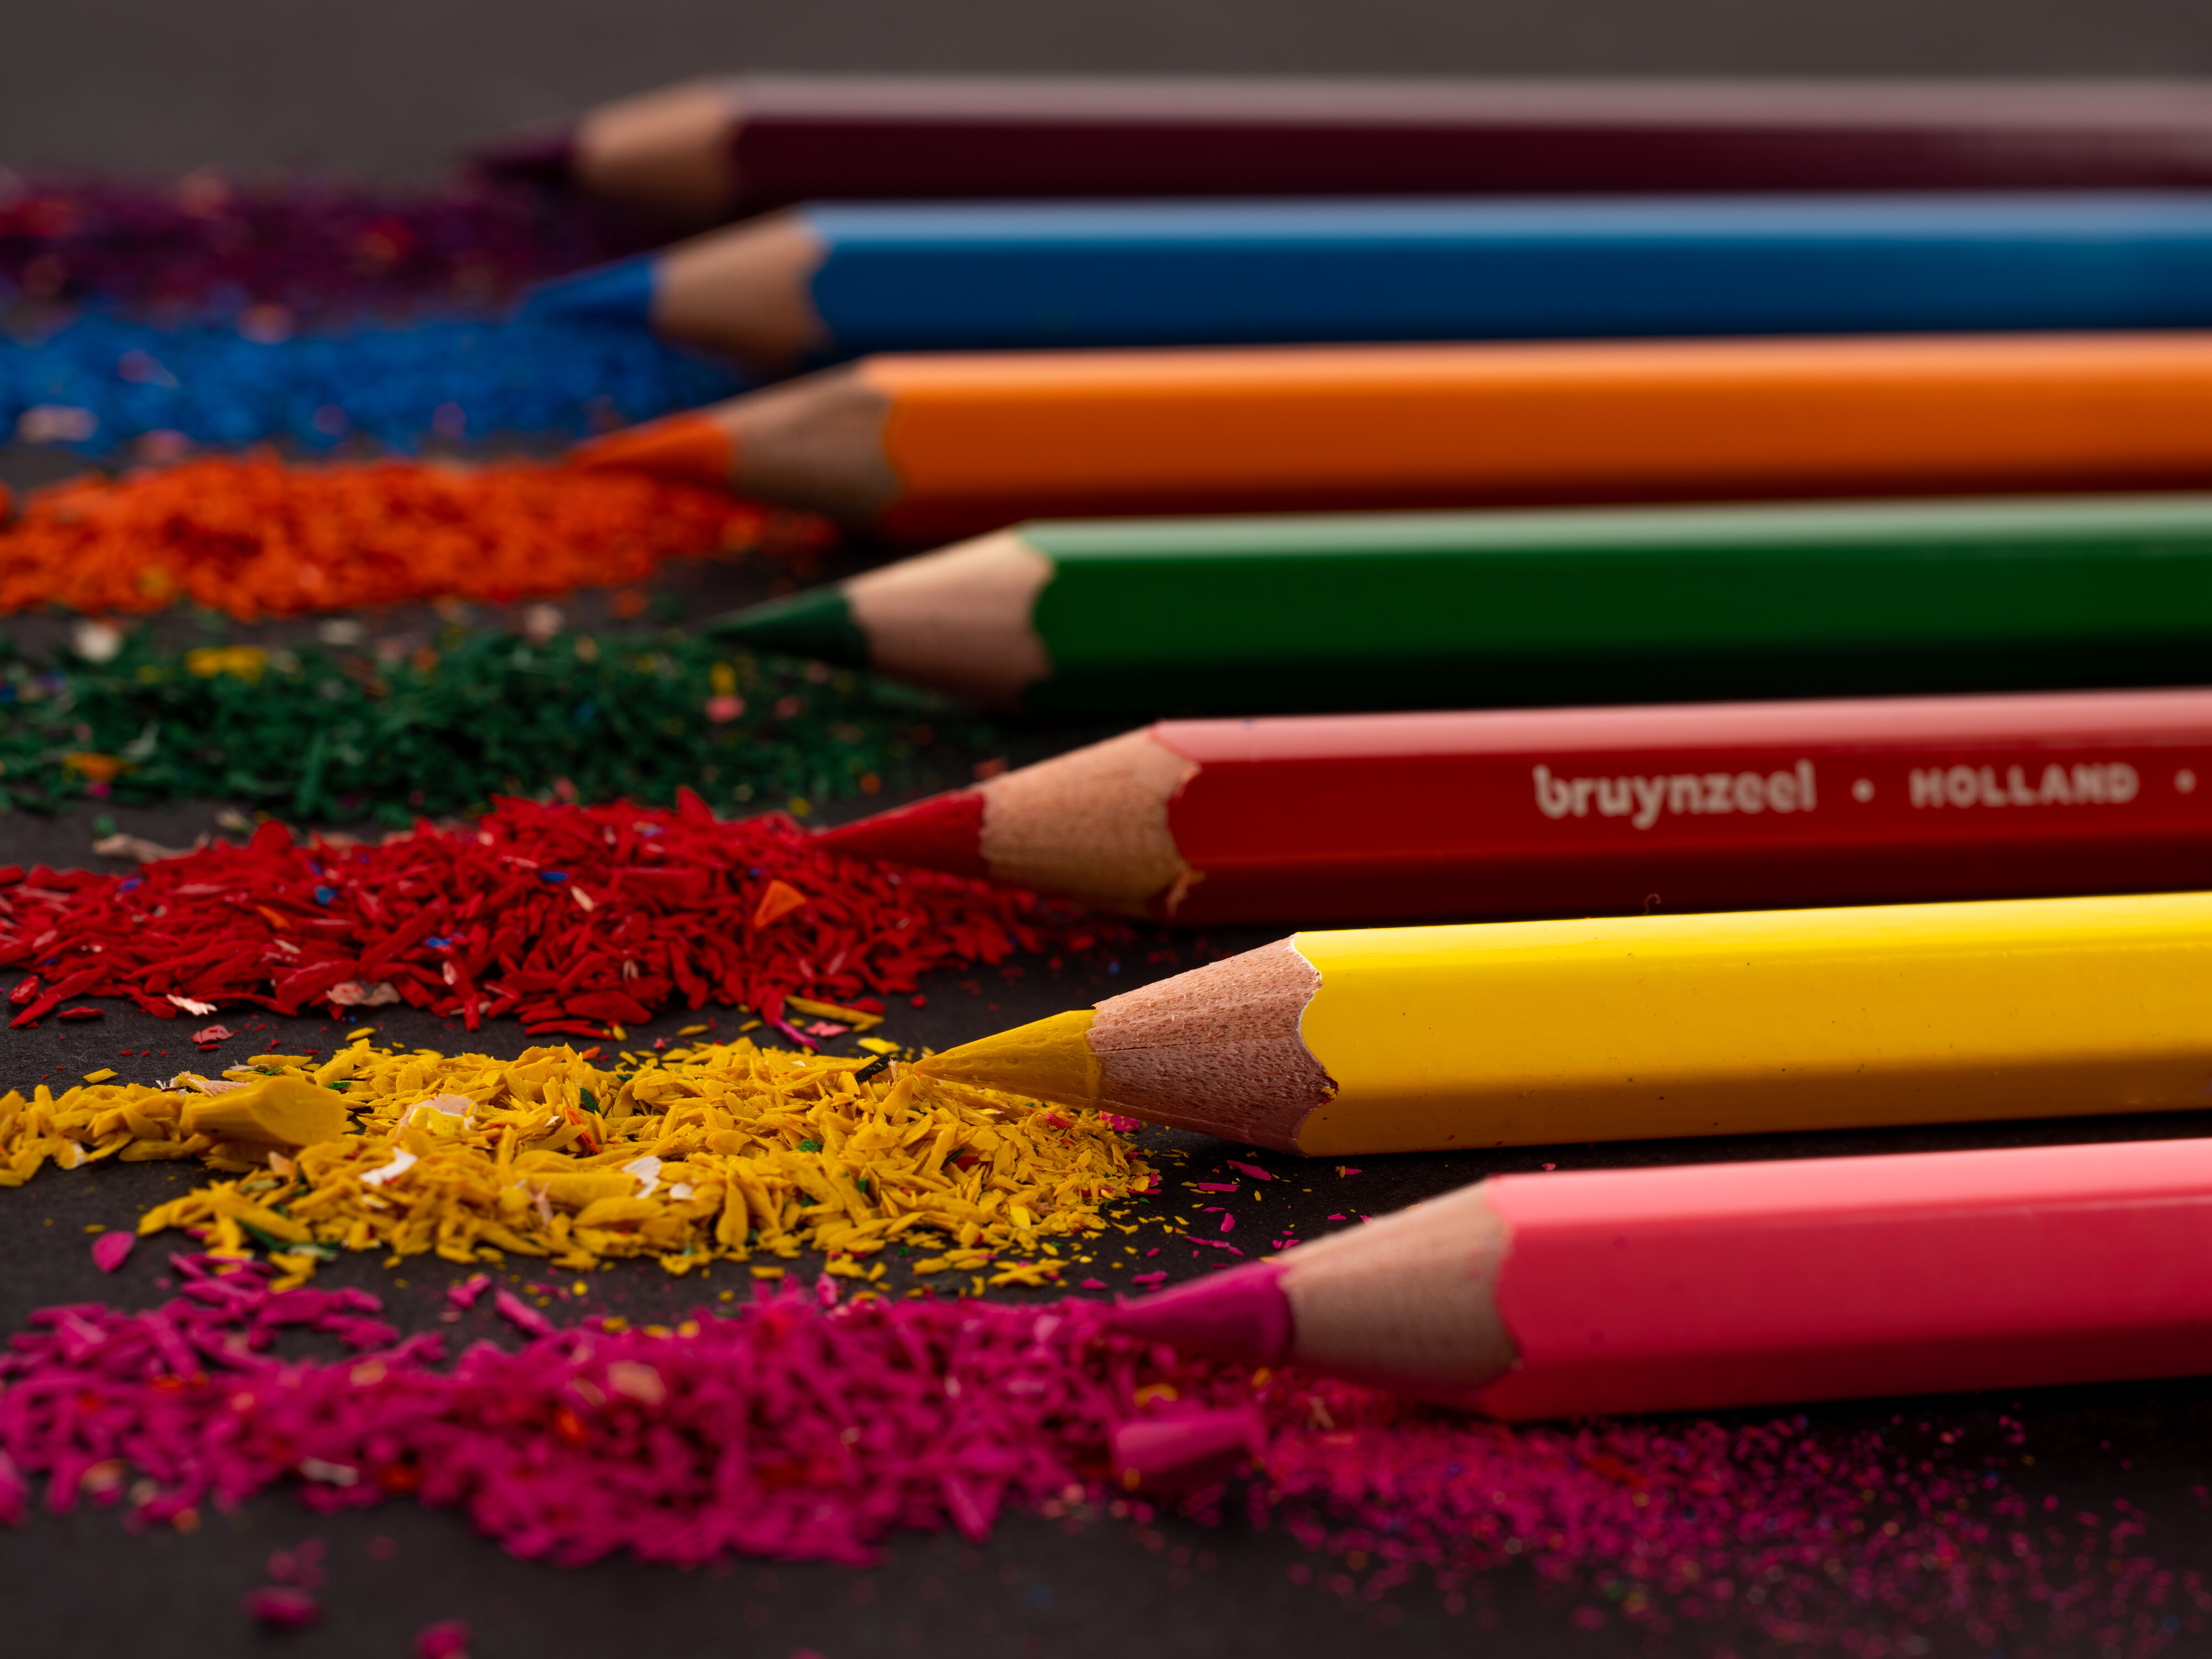 Набор цветных карандашей Bruynzeel 